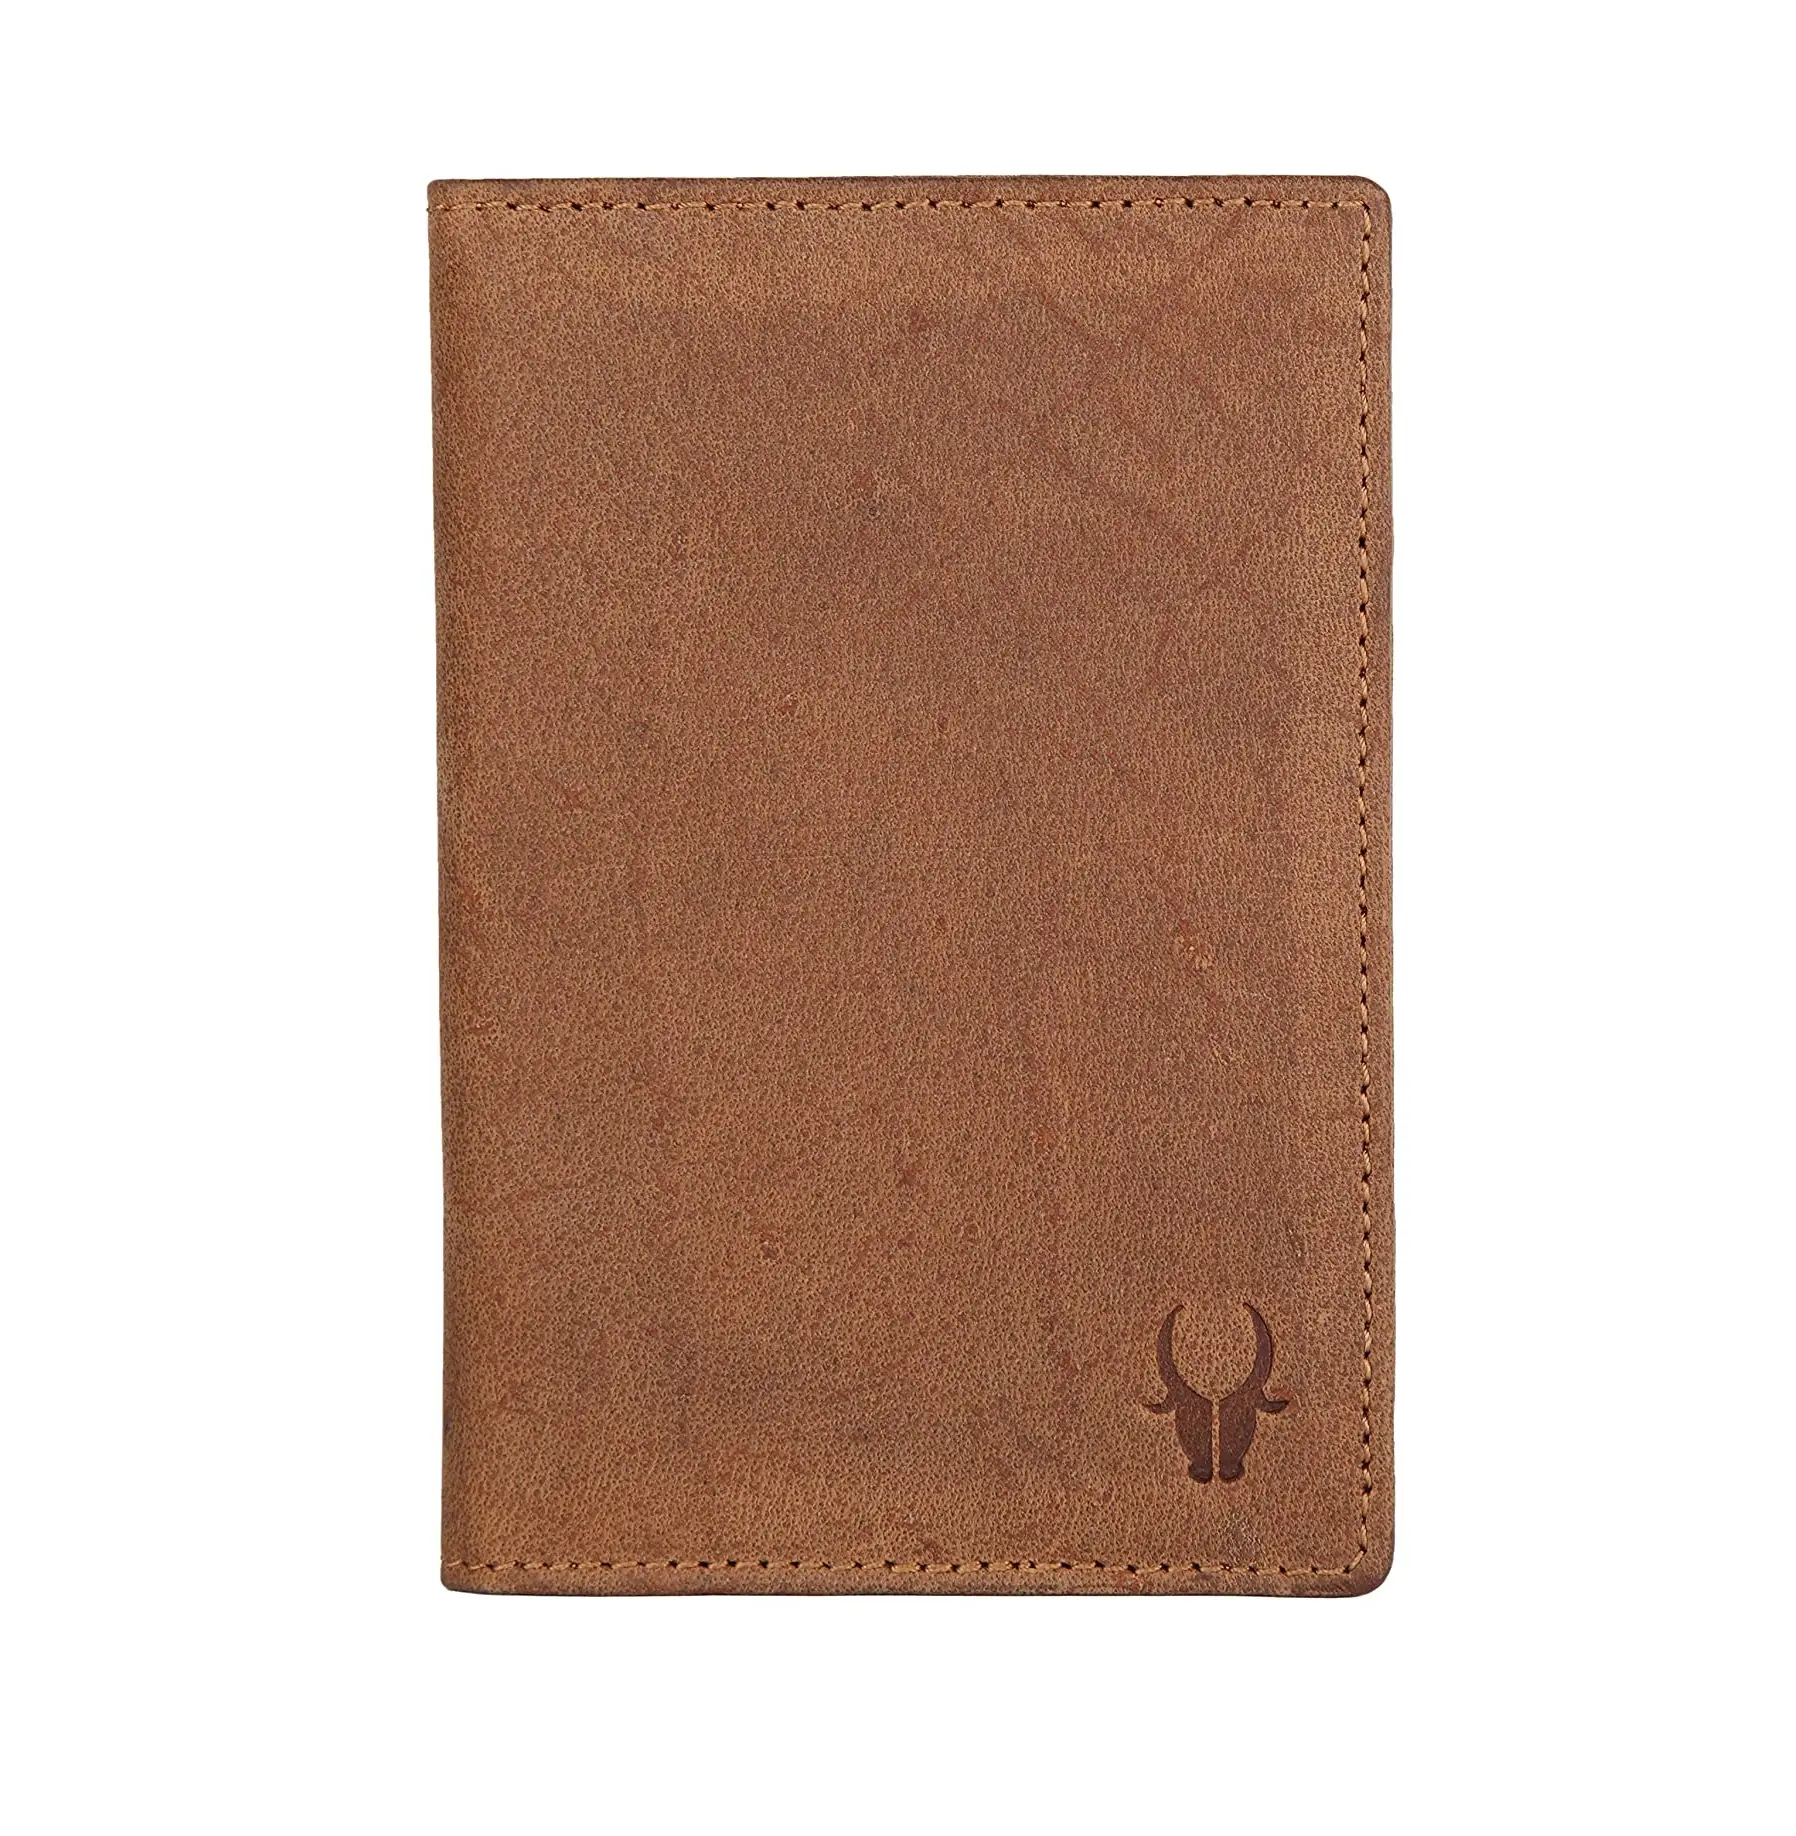 Hot selling custom logo Genuine leather passport holder rfid travel passport wallet customize for travel document organizer